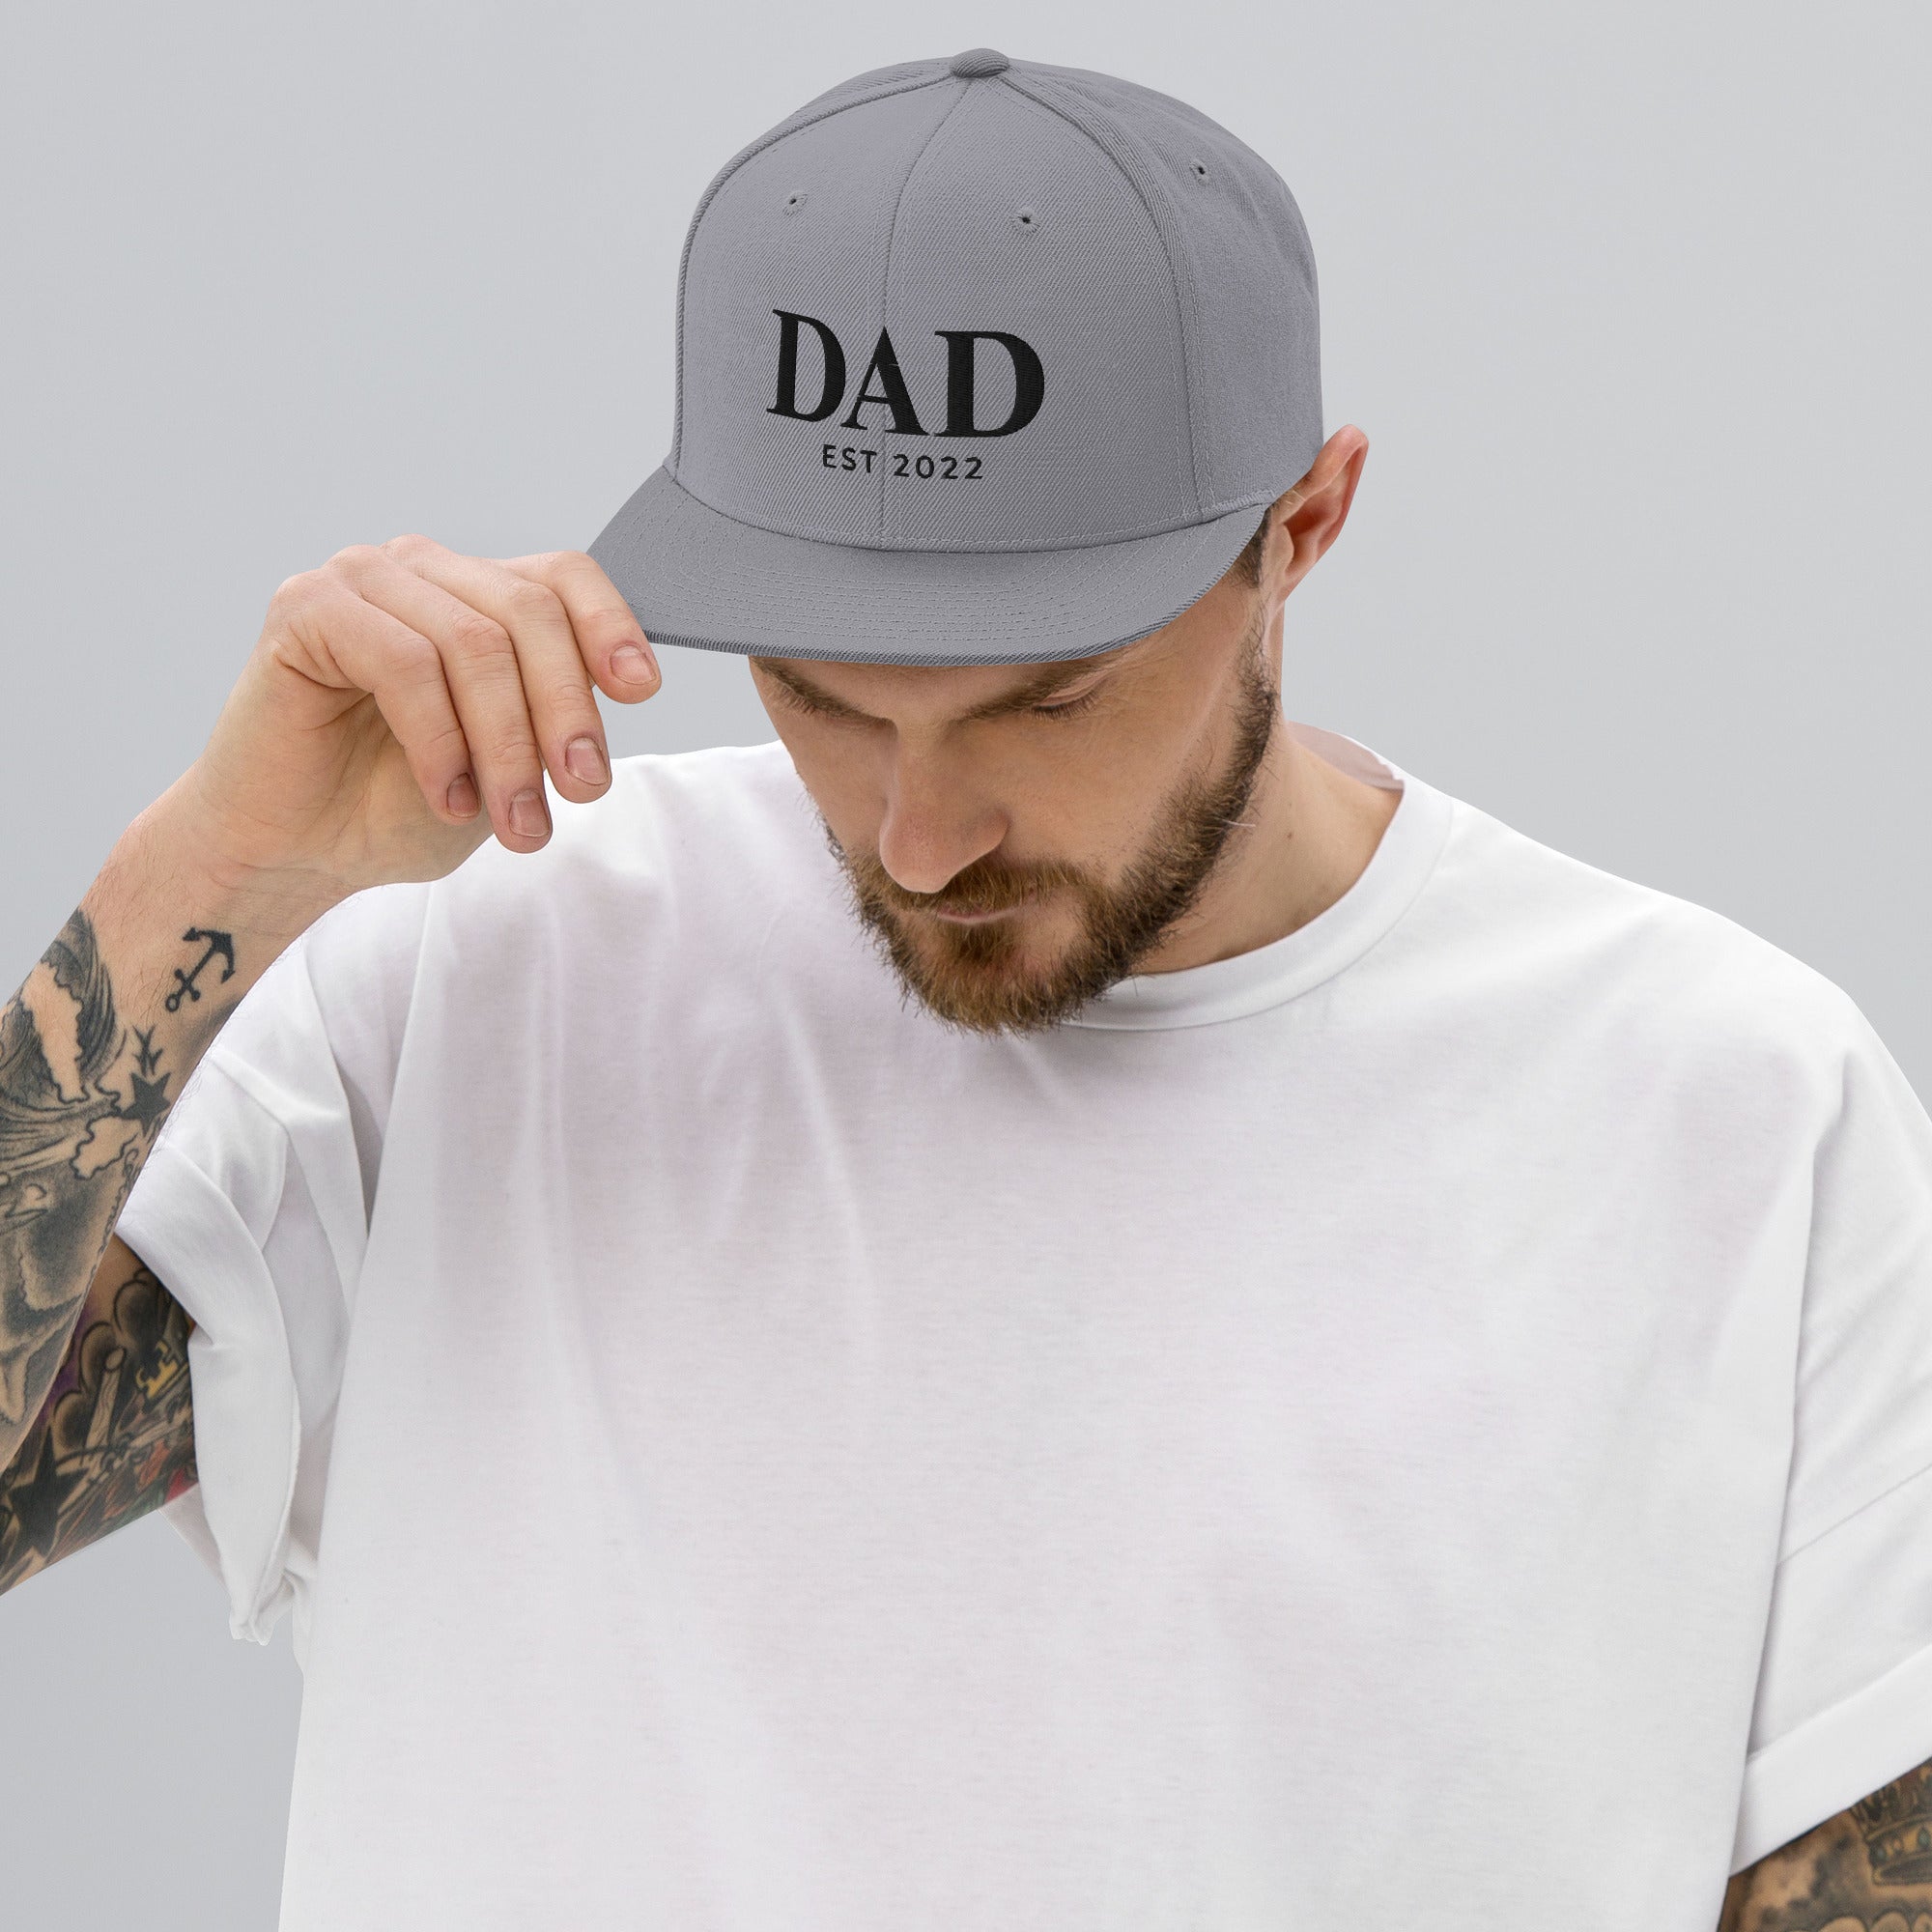 DAD EST 2022 Snapback Hat Odds Store The – Ends 